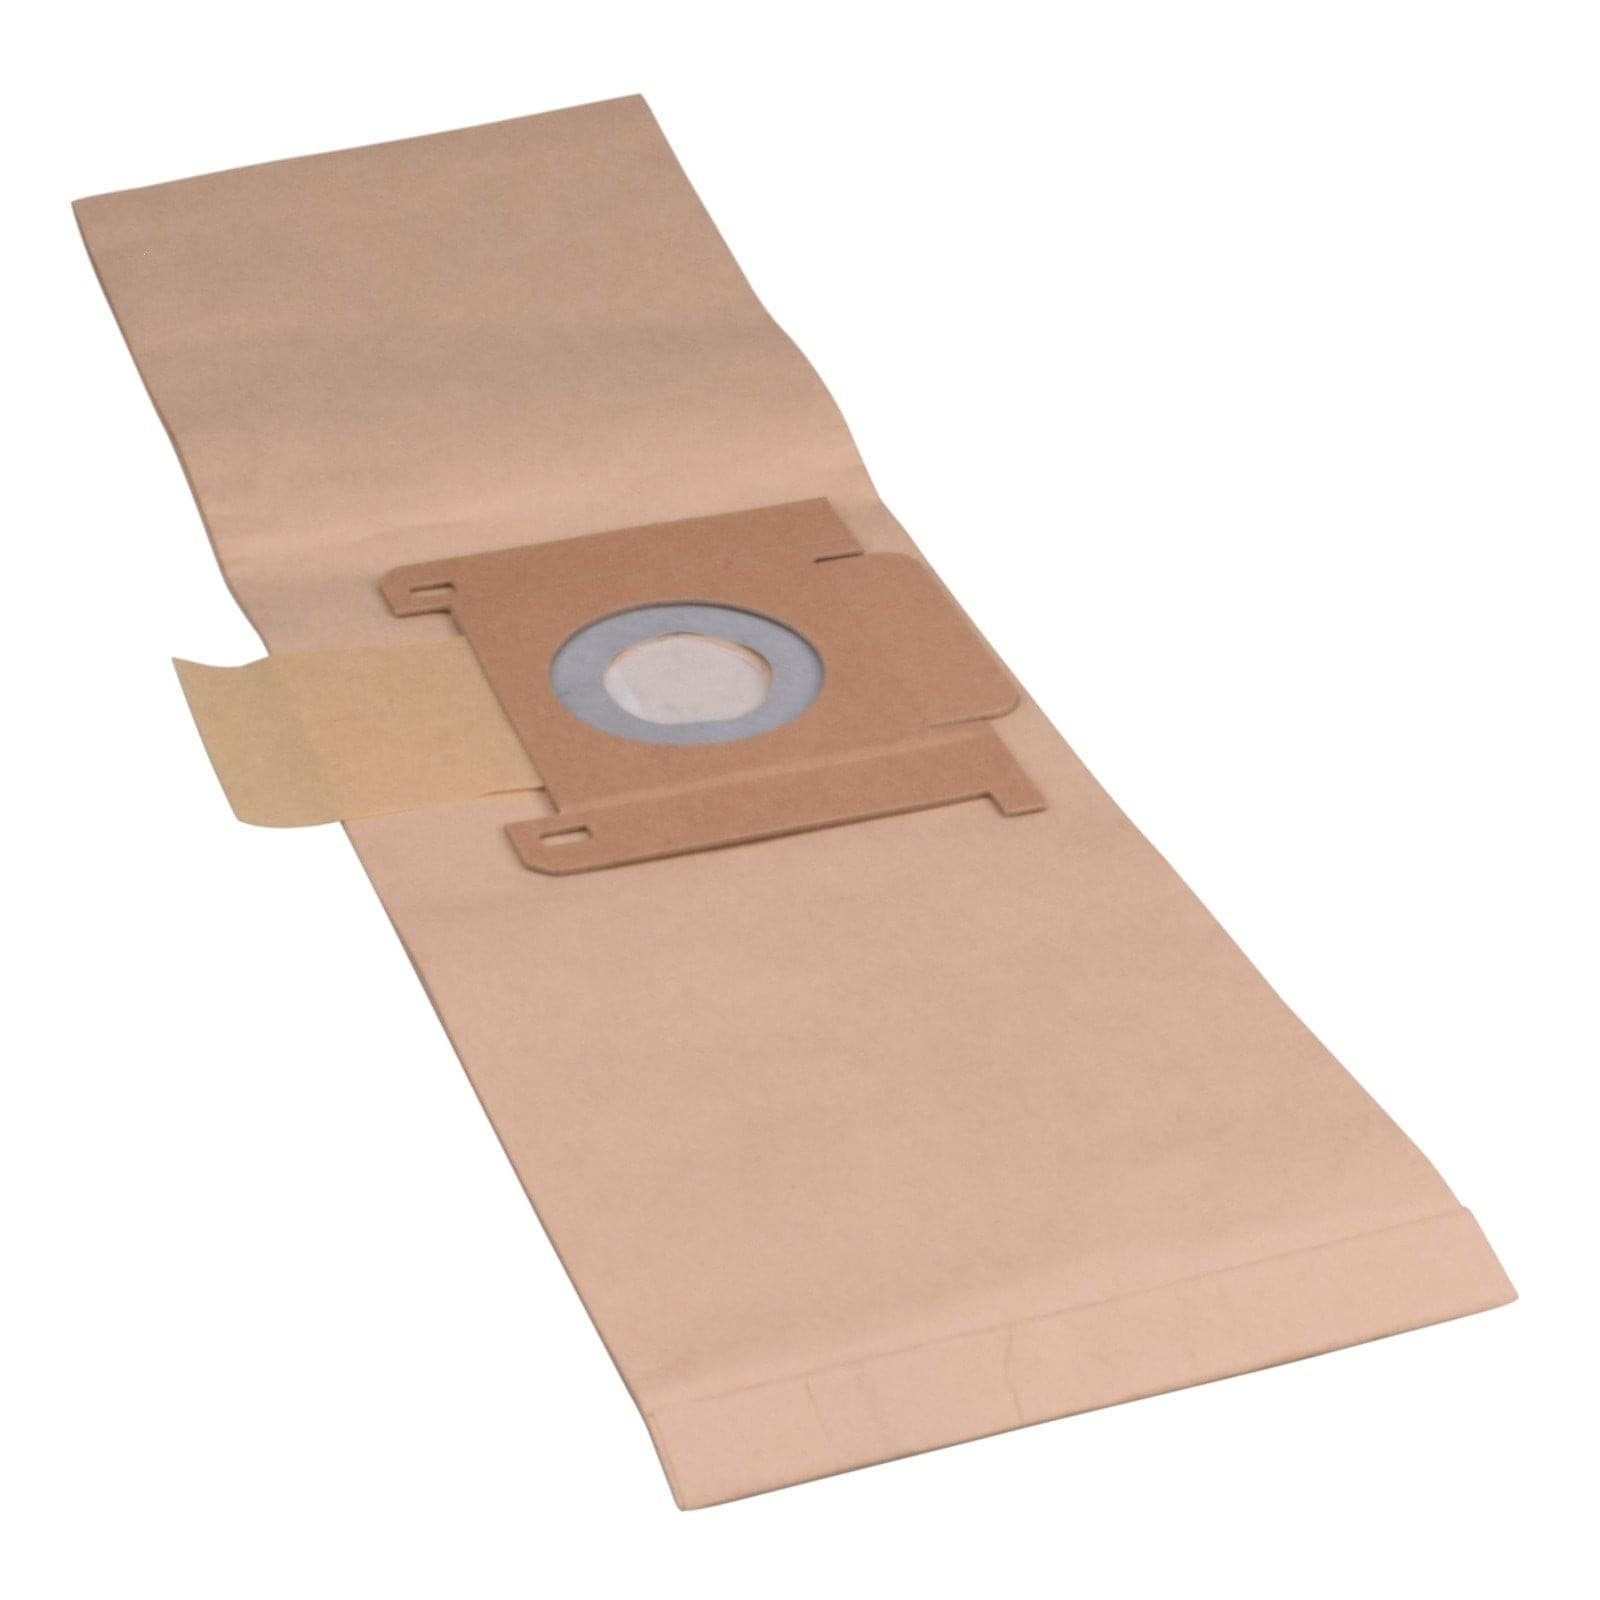 Reinica Staubsaugerbeutel passend für Clean a la Card I-vac C5, 10er-Pack Staubbeutel Saugerbeutel Beutel Filtertüten